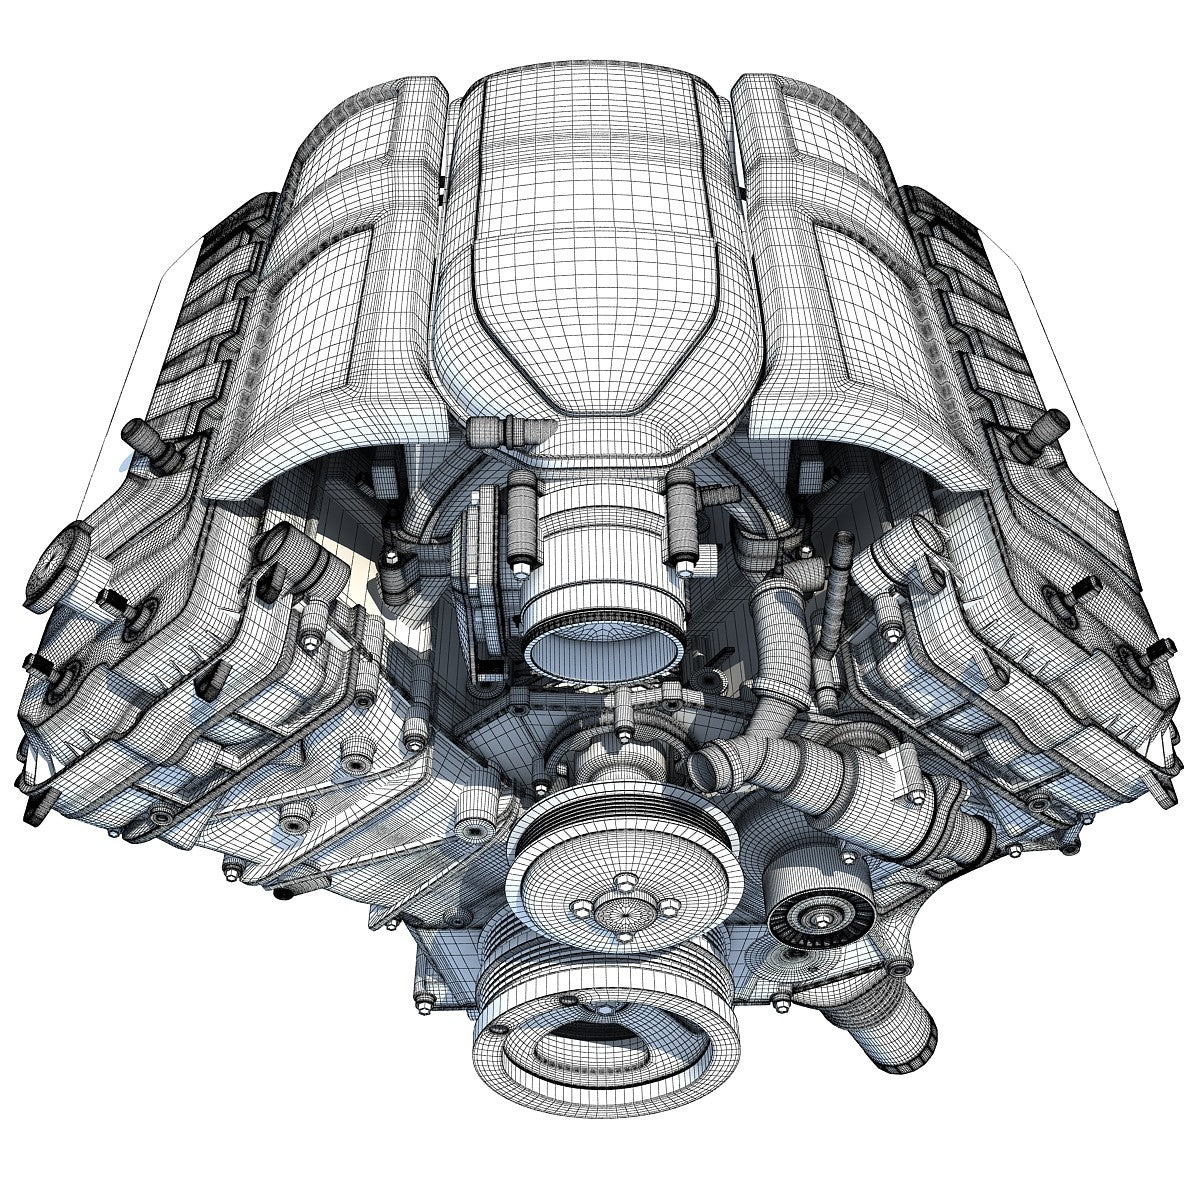 3D Engine Model